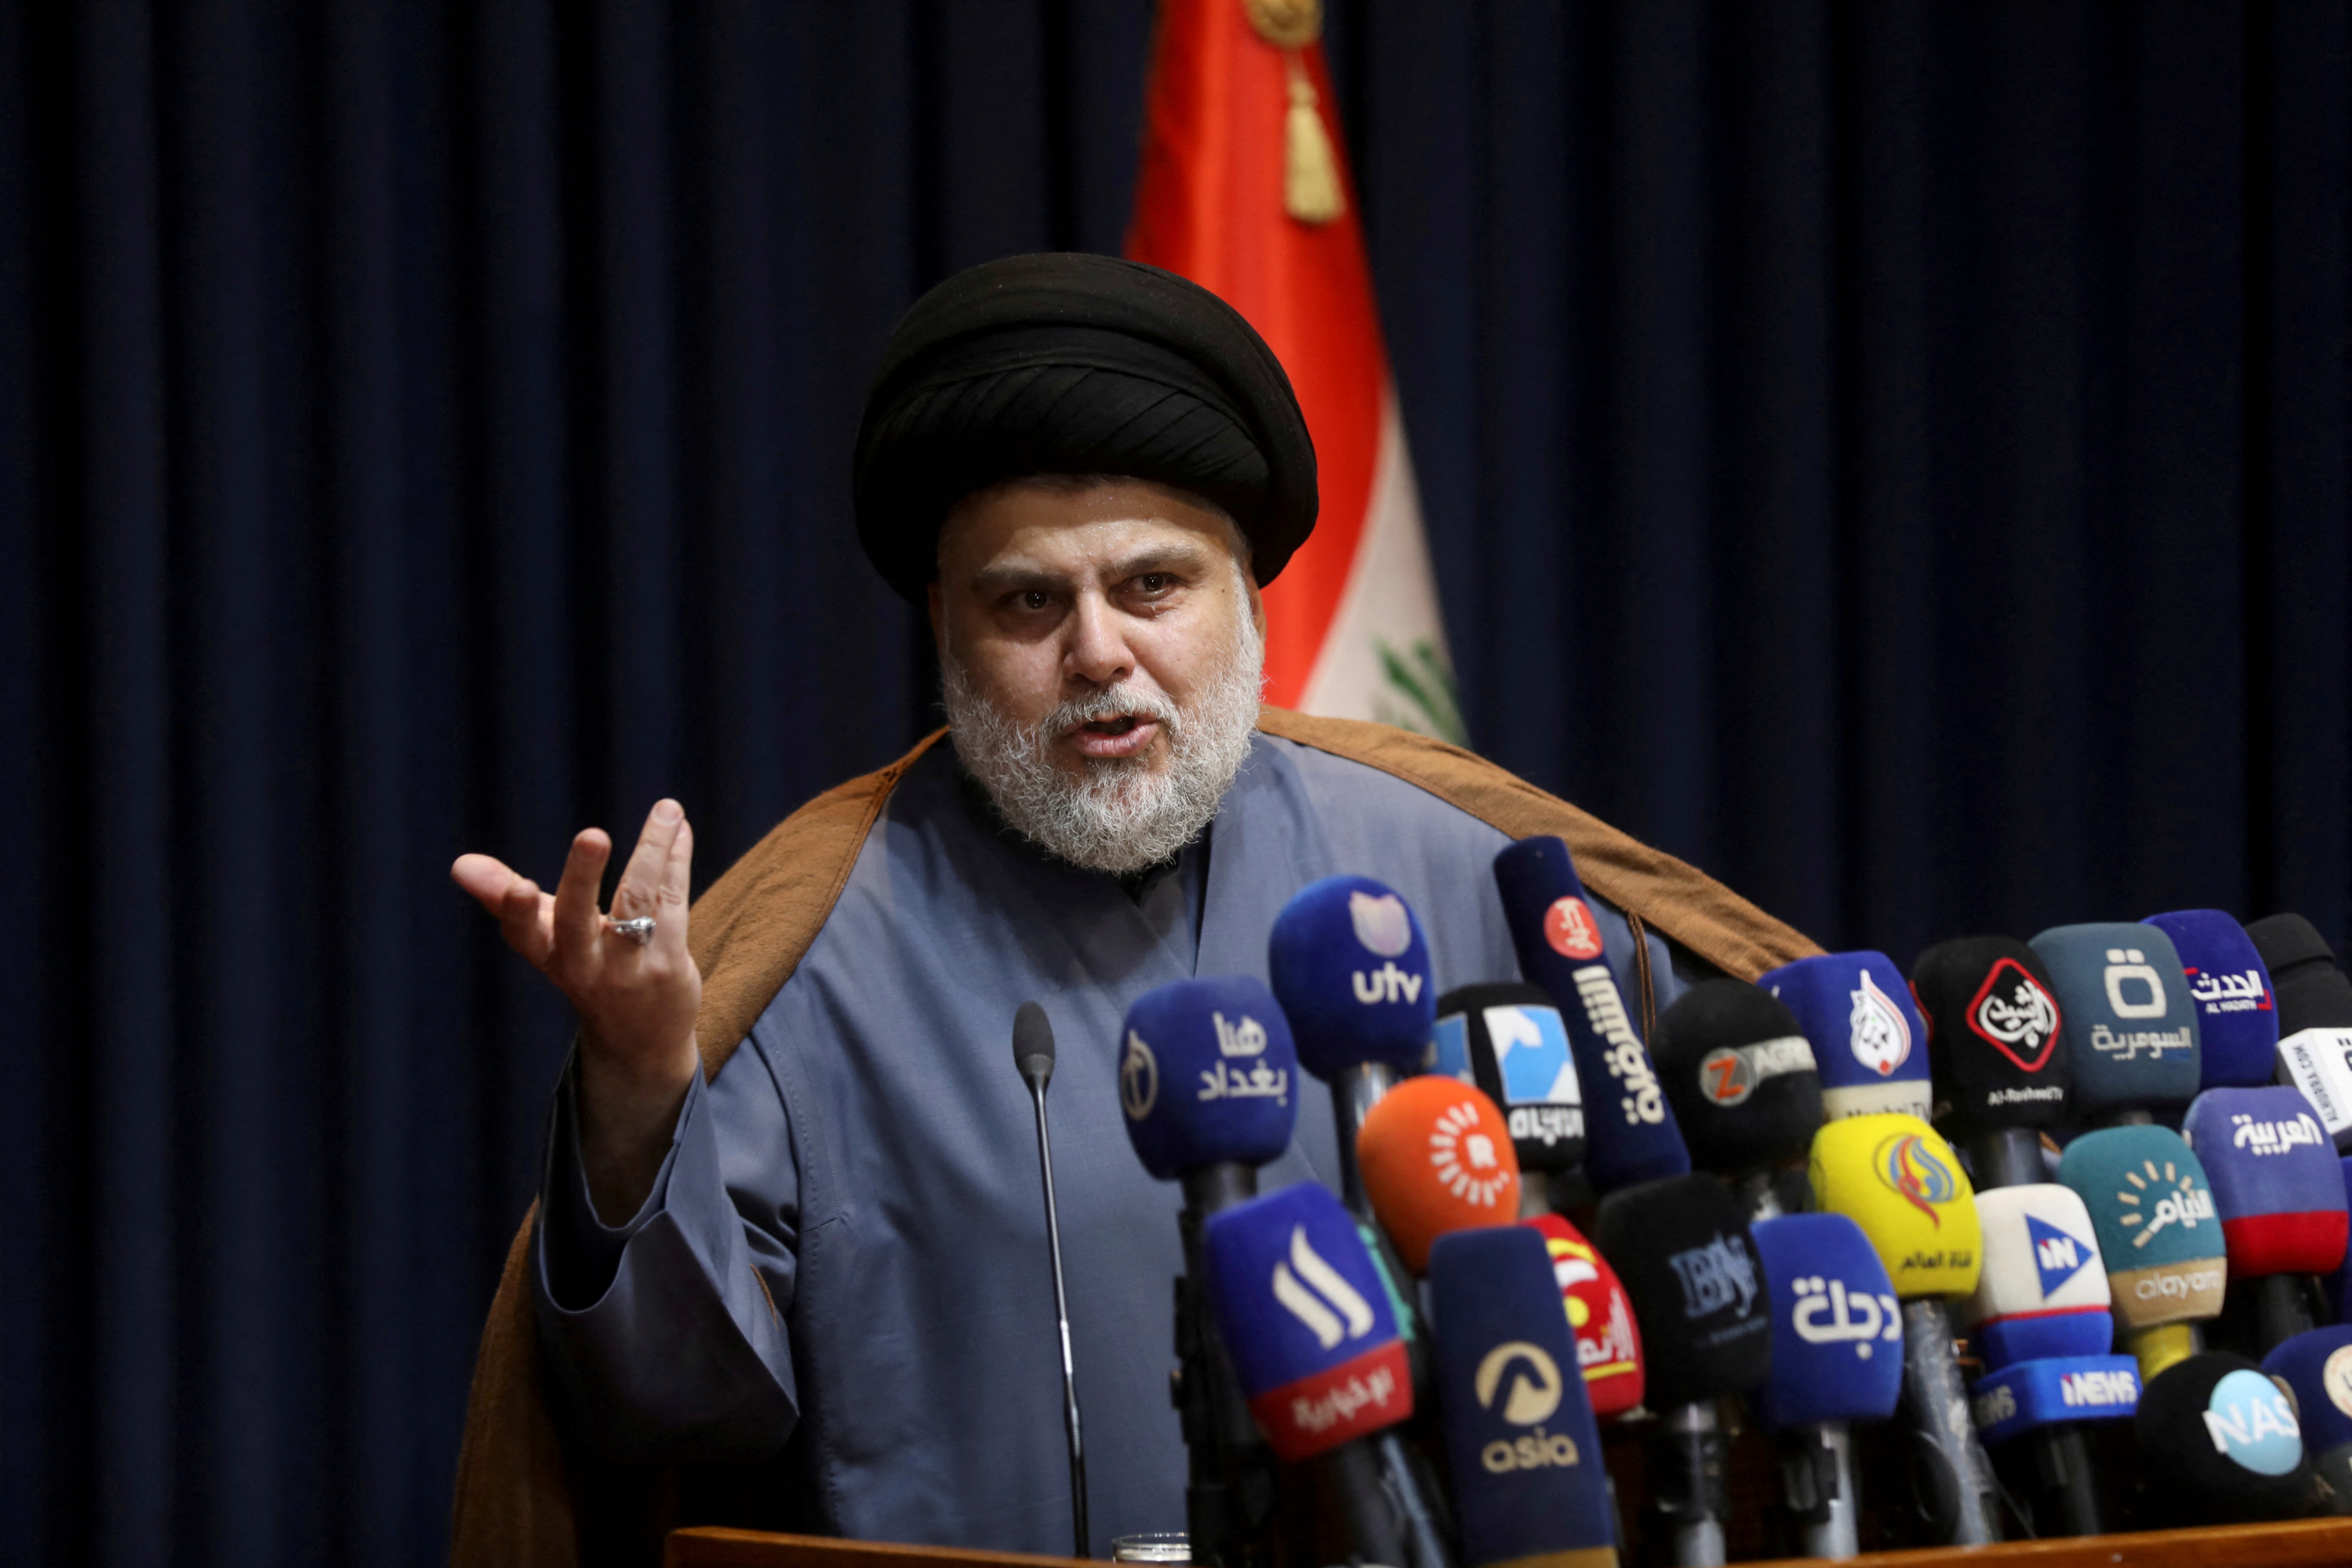 Iraqi Shi'ite cleric Muqtada al-Sadr speaks during a news conference in Najaf